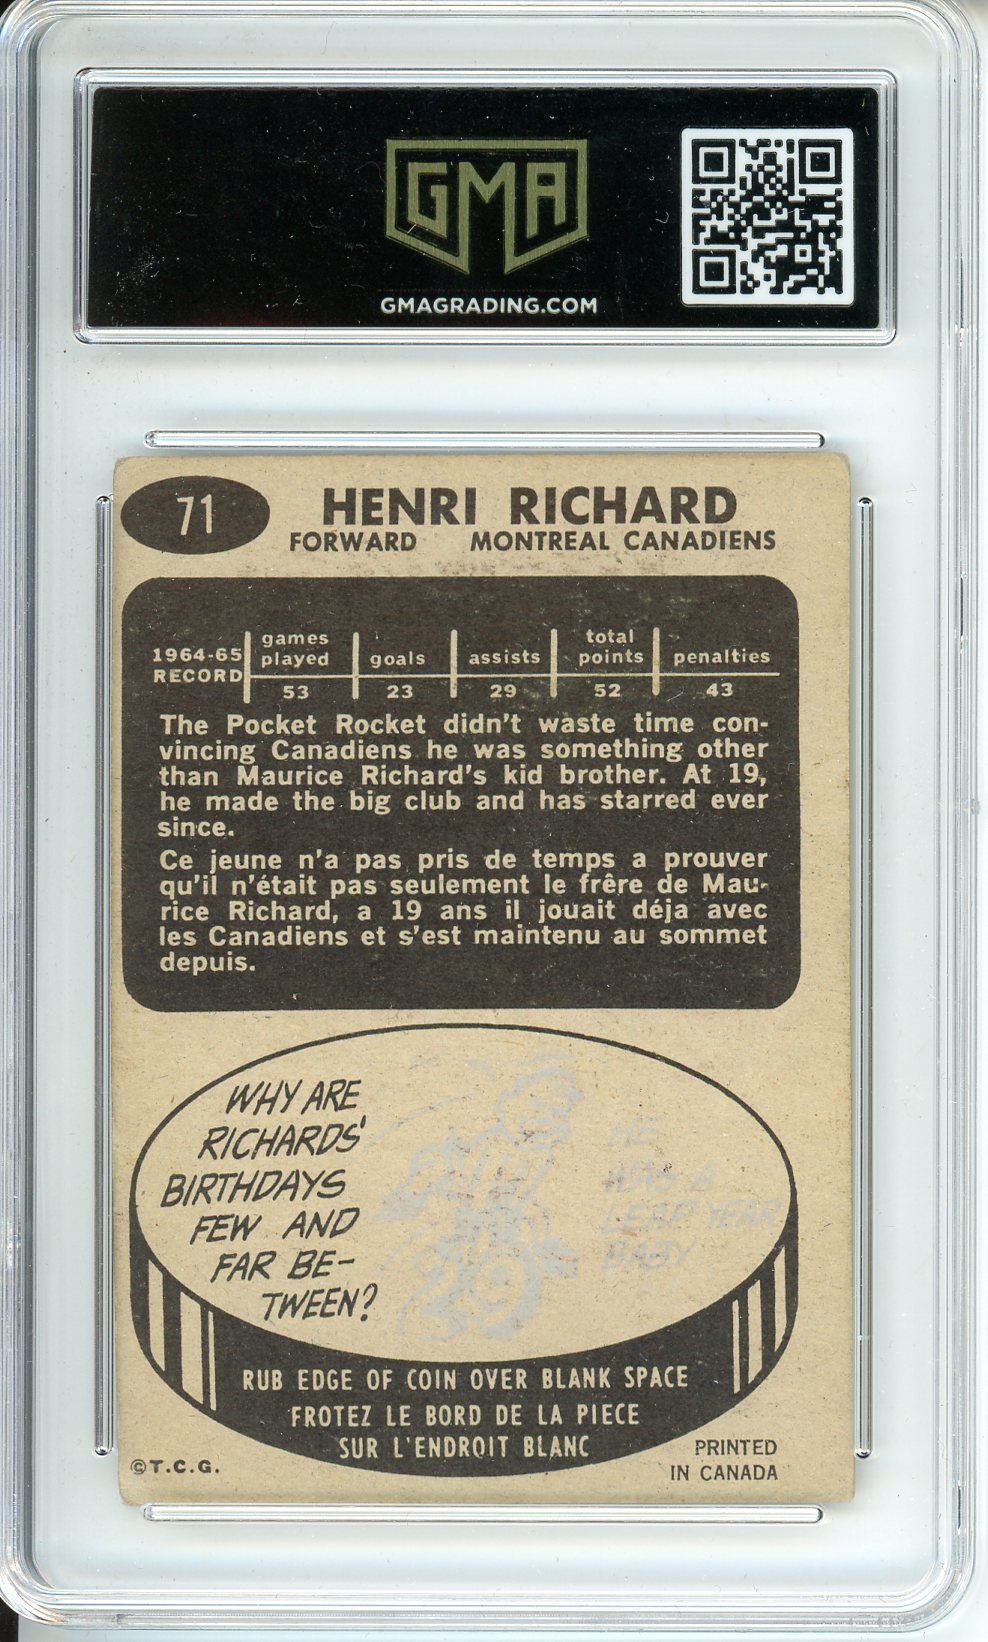 1965 Topps Henri Richard #71 Graded Vintage Card GMA 3